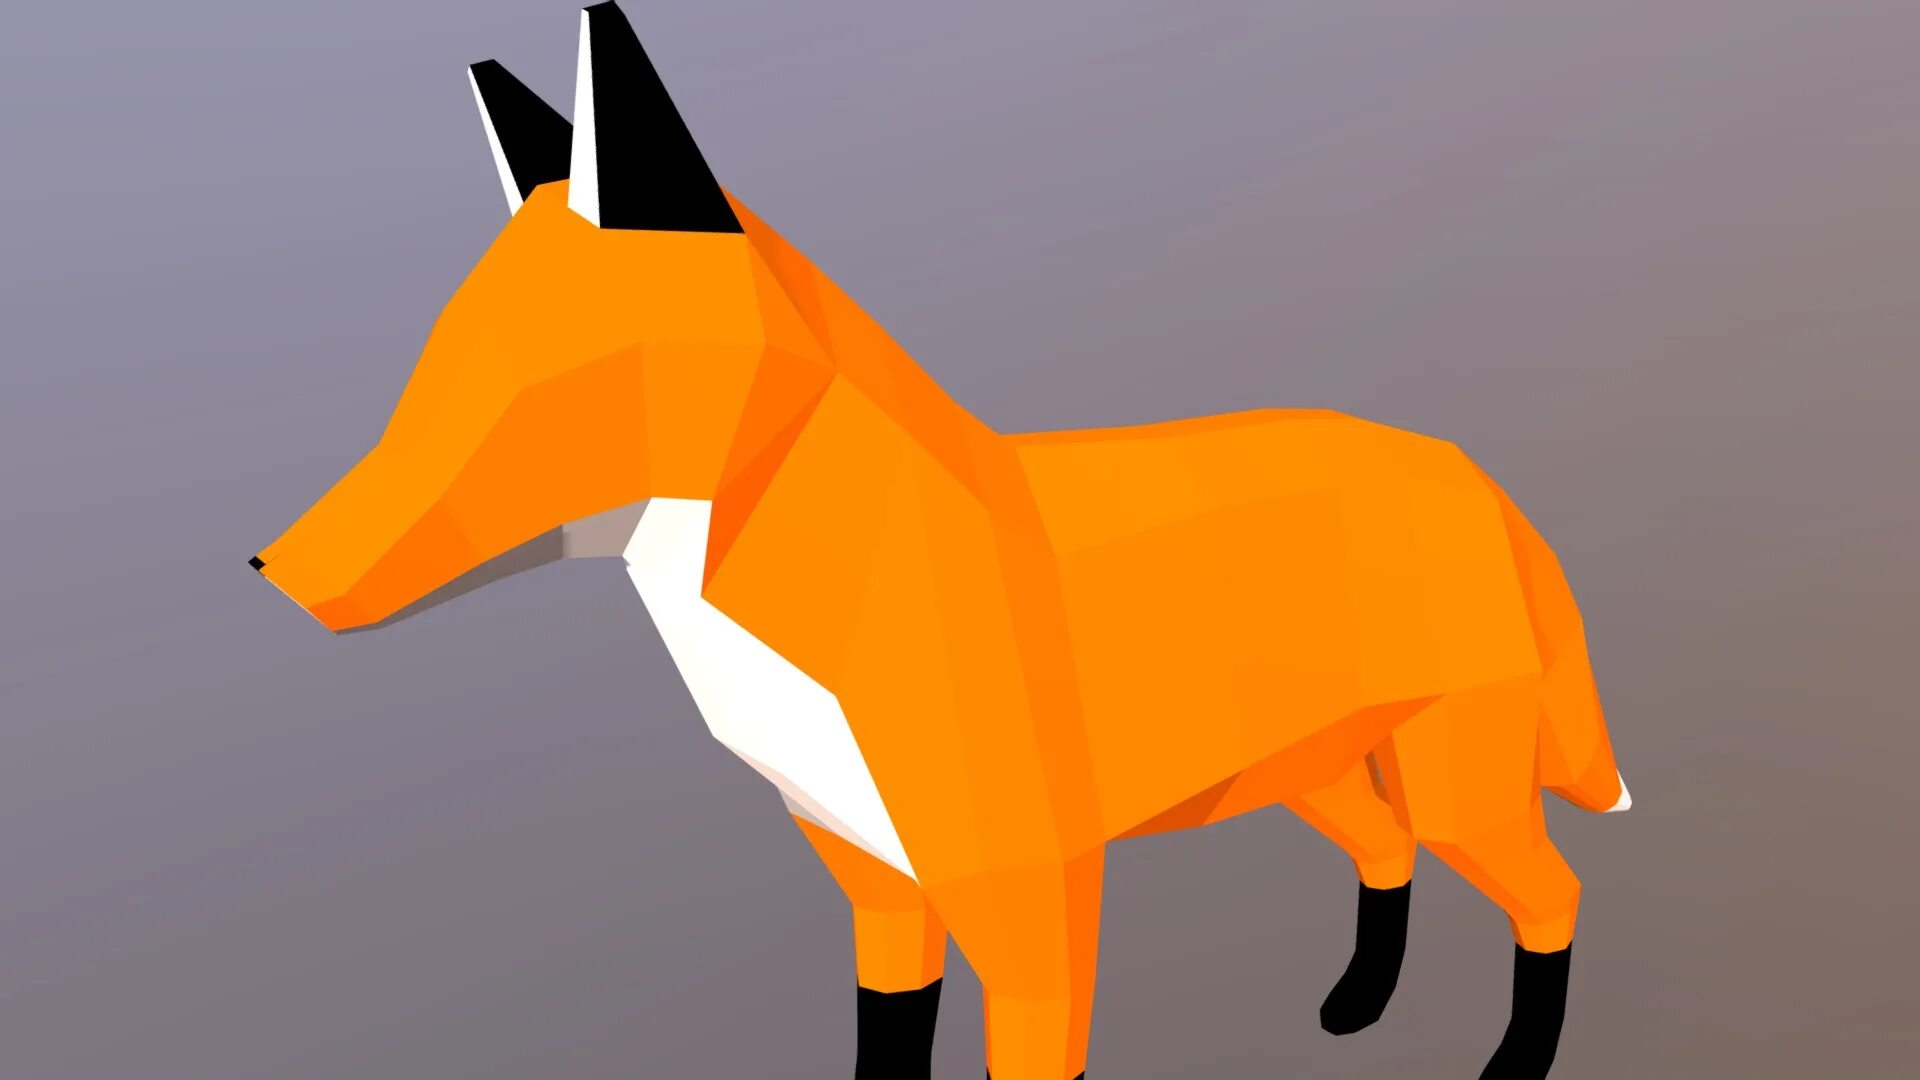 Make fox. Low Poly Fox 3d model. Лиса Low Poly. Лоу Поли лиса 3д. Модель лисы.